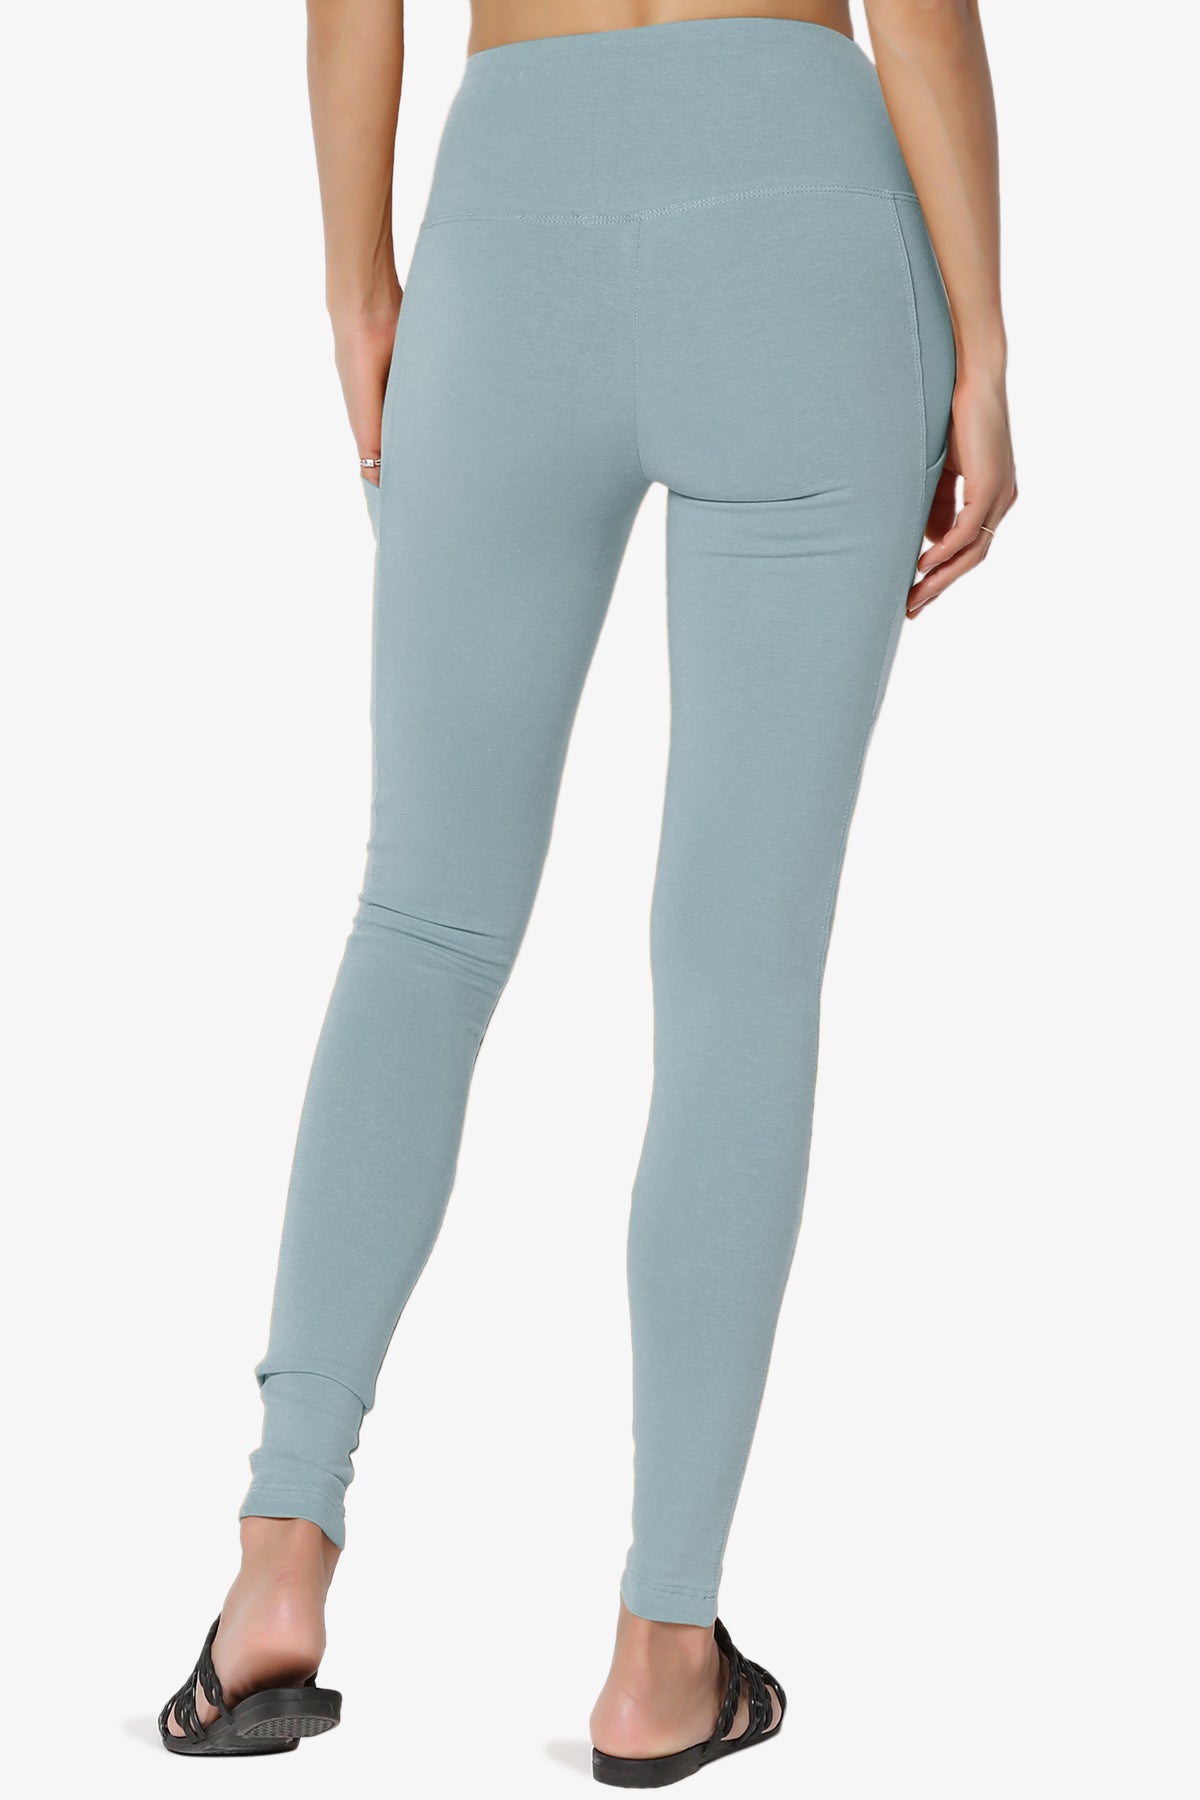 Toocool - Leggings pantalones LIQUID metalizados mujer leggins cintura alta  fuseaux DL-672